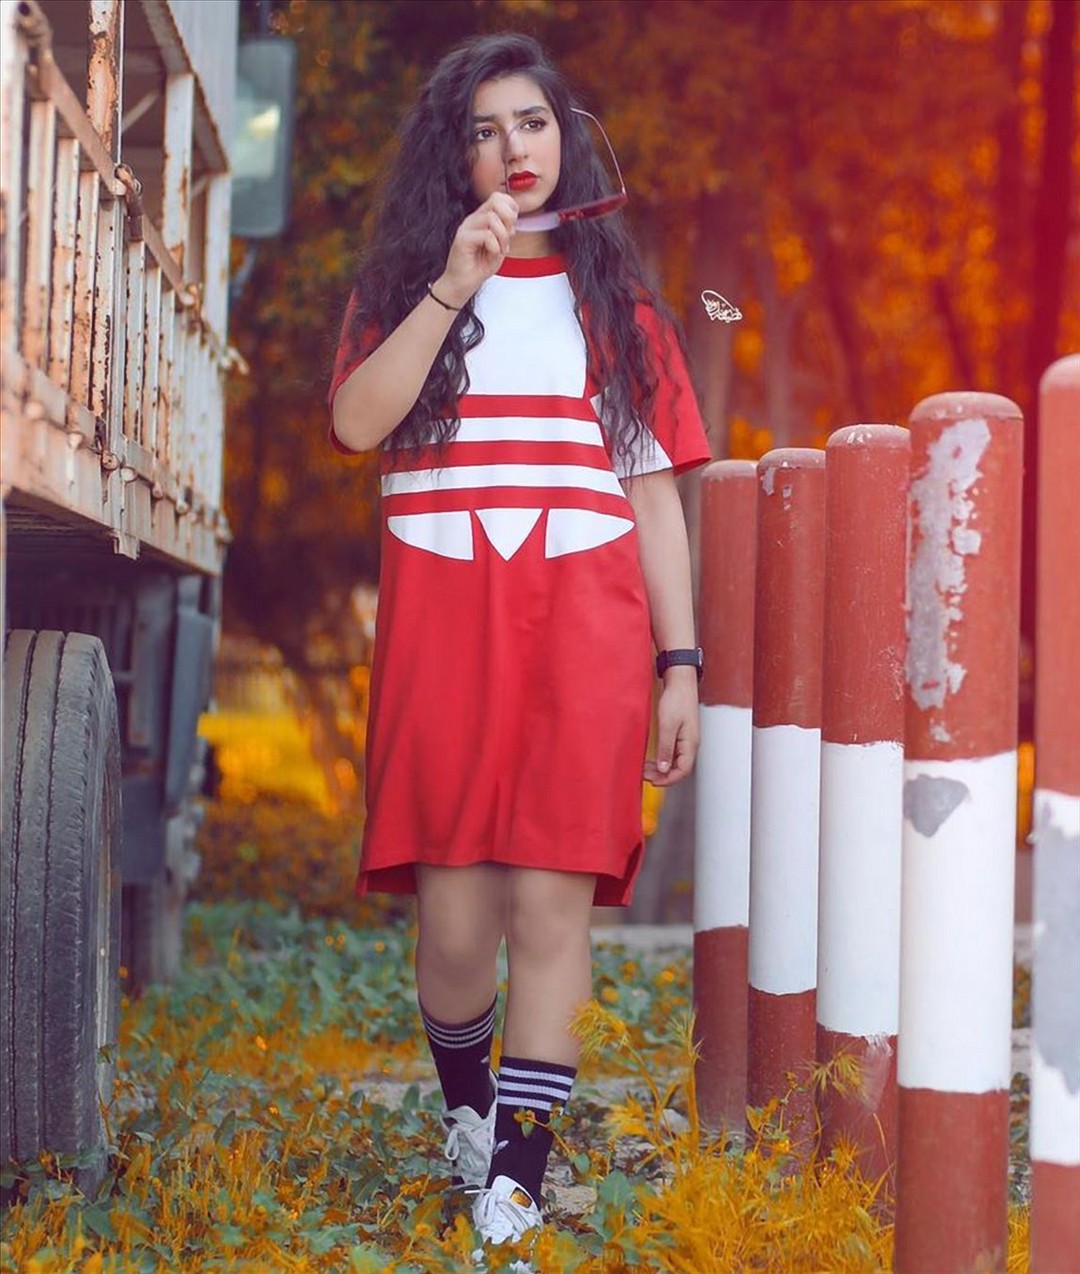 Ghrour Safar Red Dress Teen Girl Photo 01